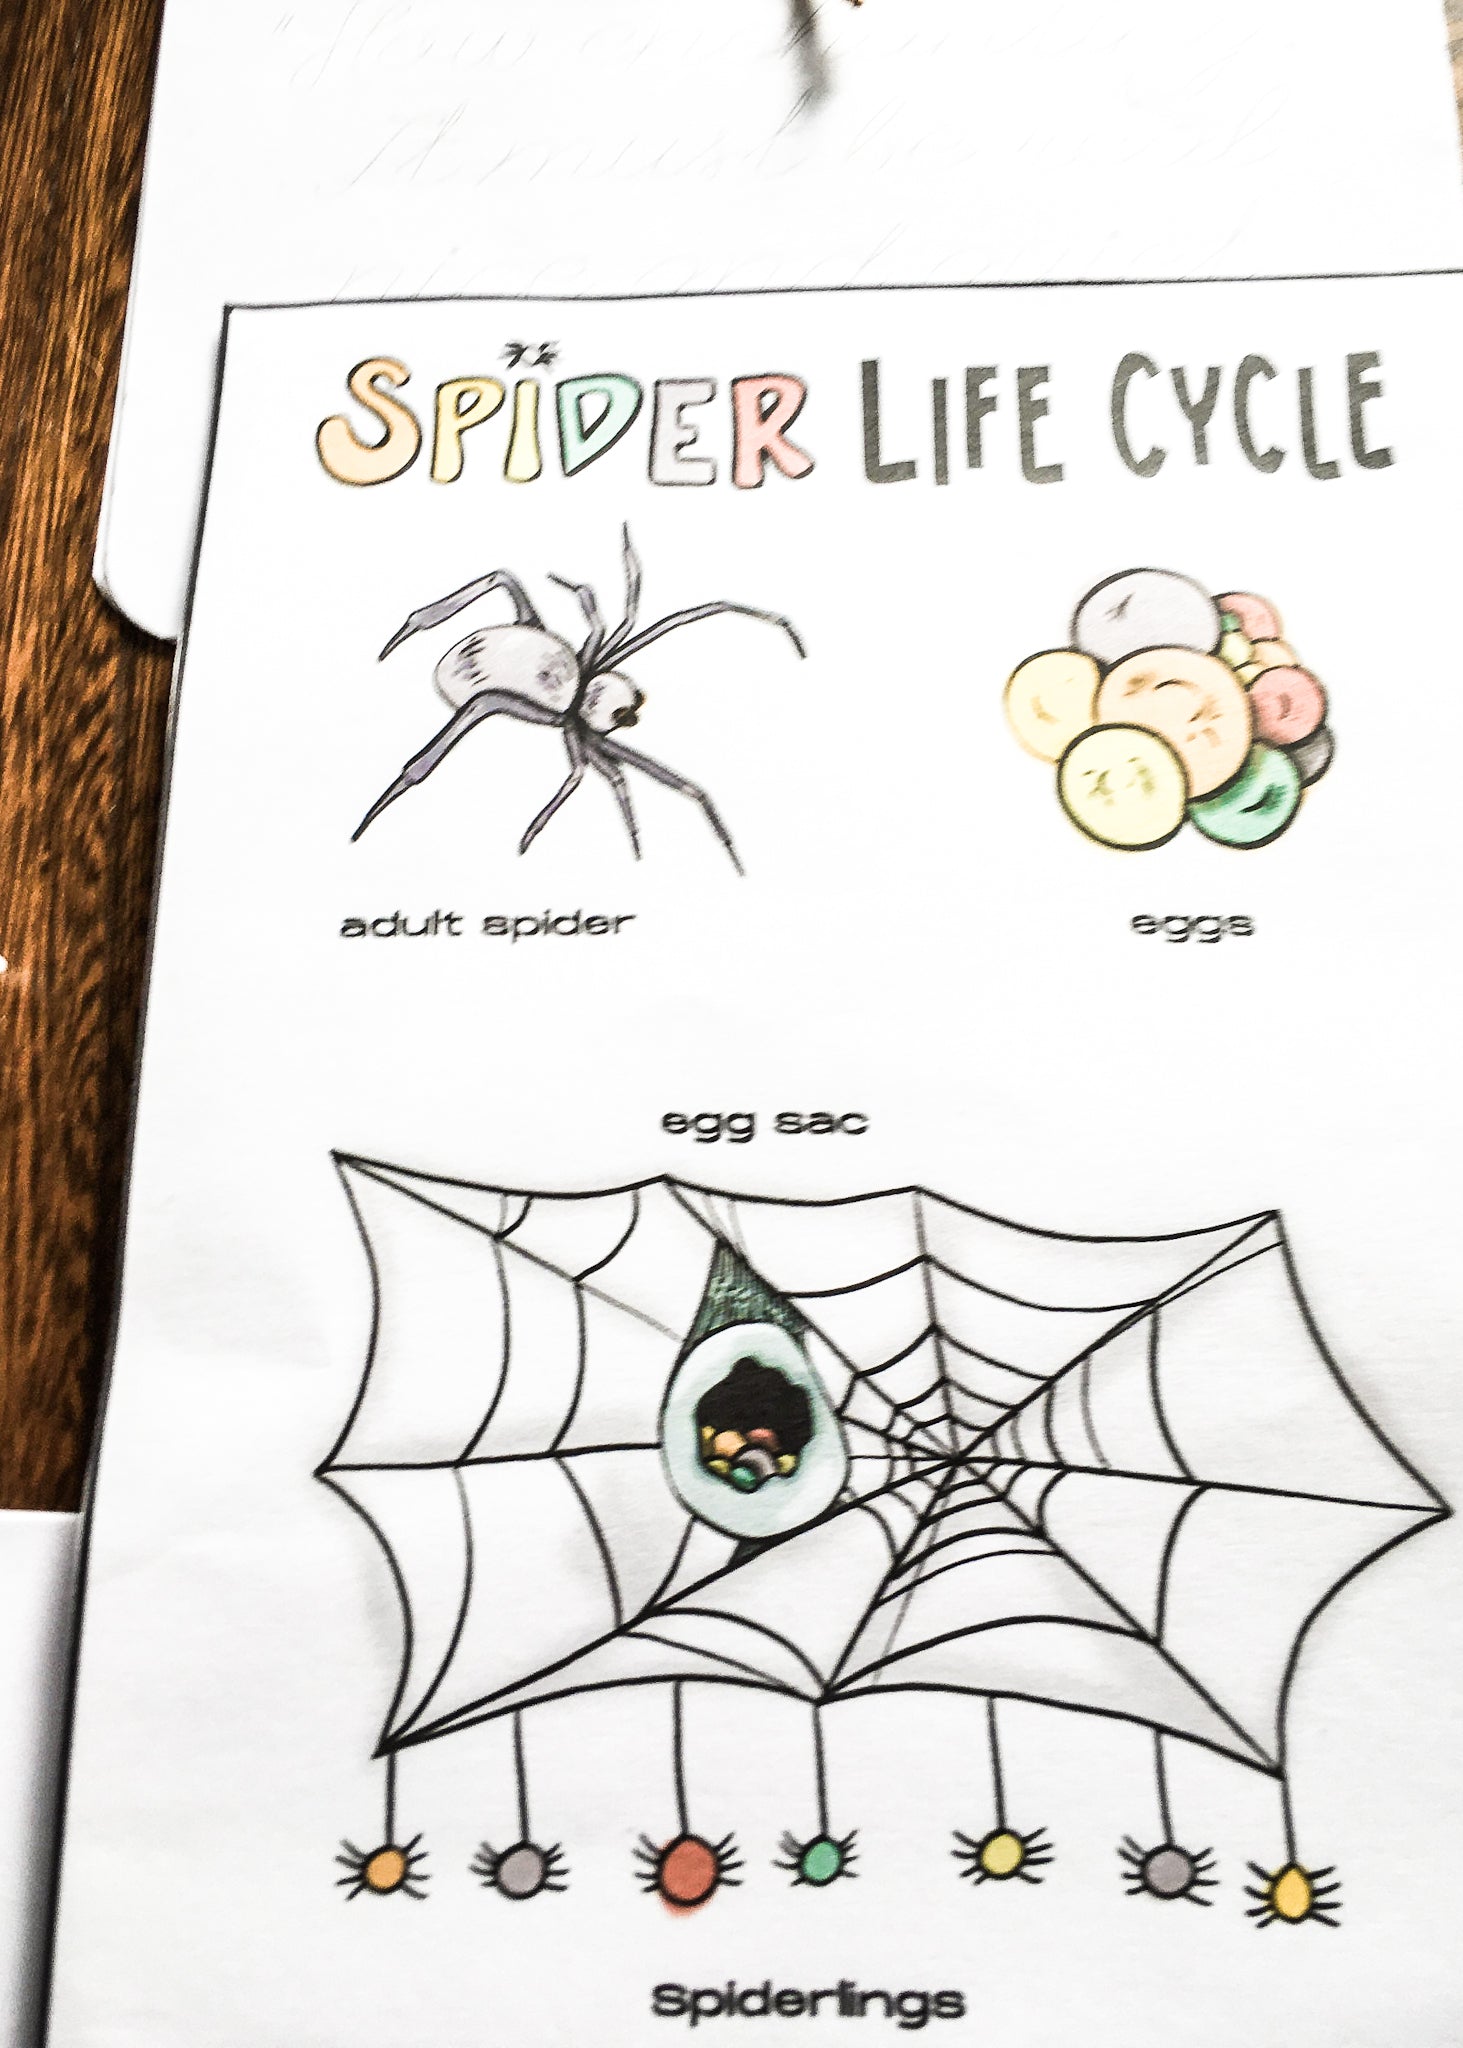 Charlotte's Web Art & Baking Unit Study + BONUS Life Cycles of a Pig & Spider!